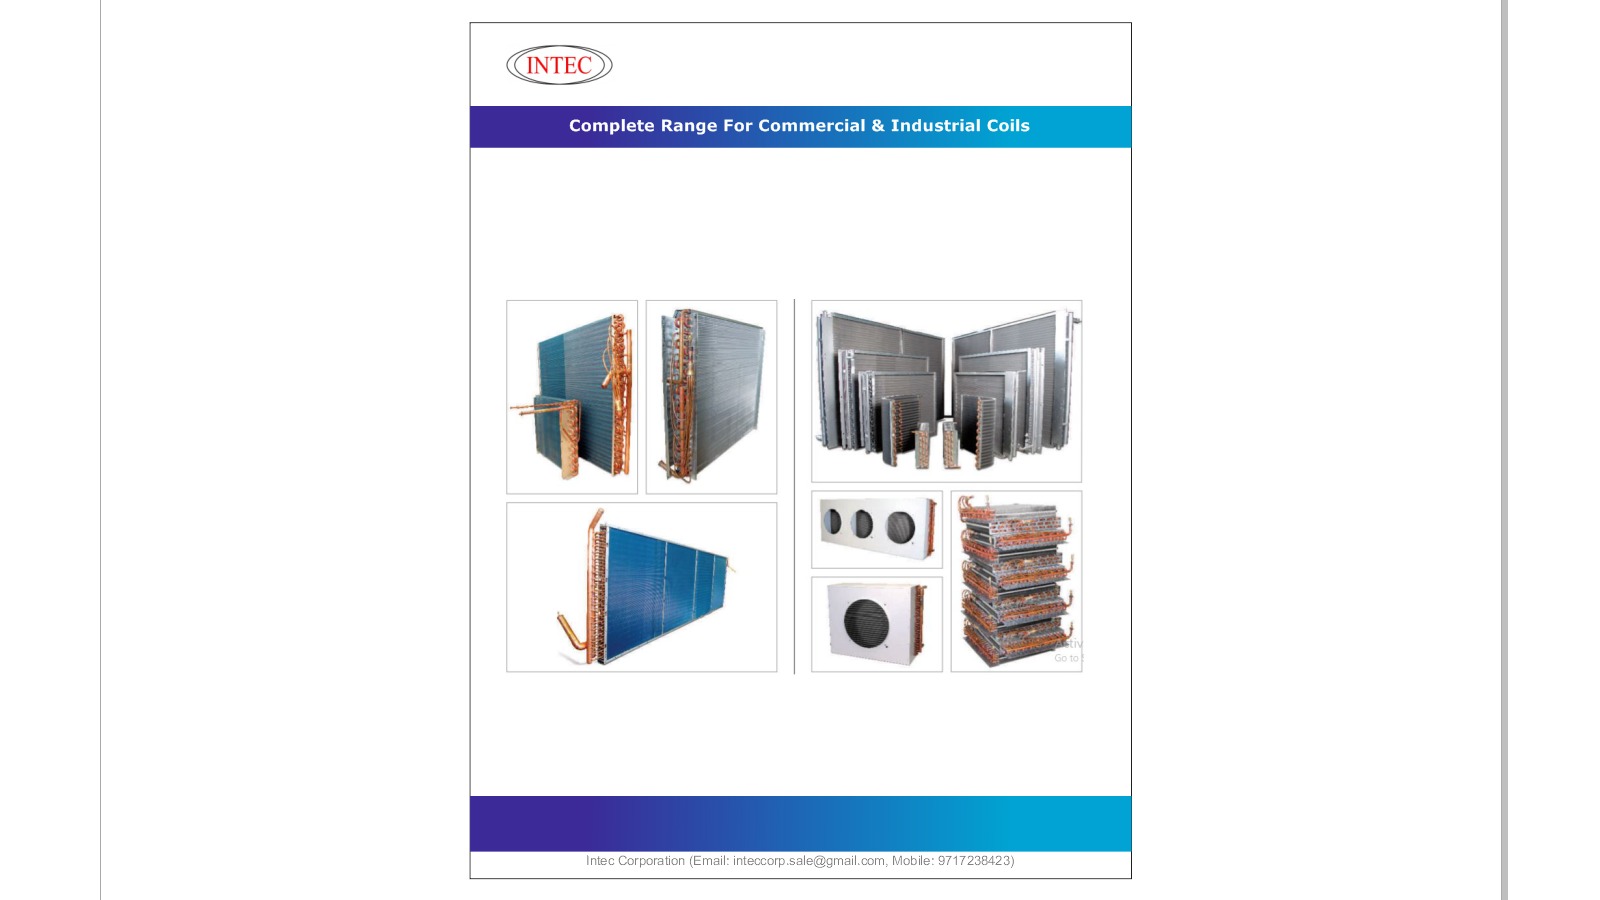 Condenser & Cooling coils (heat exchangers)